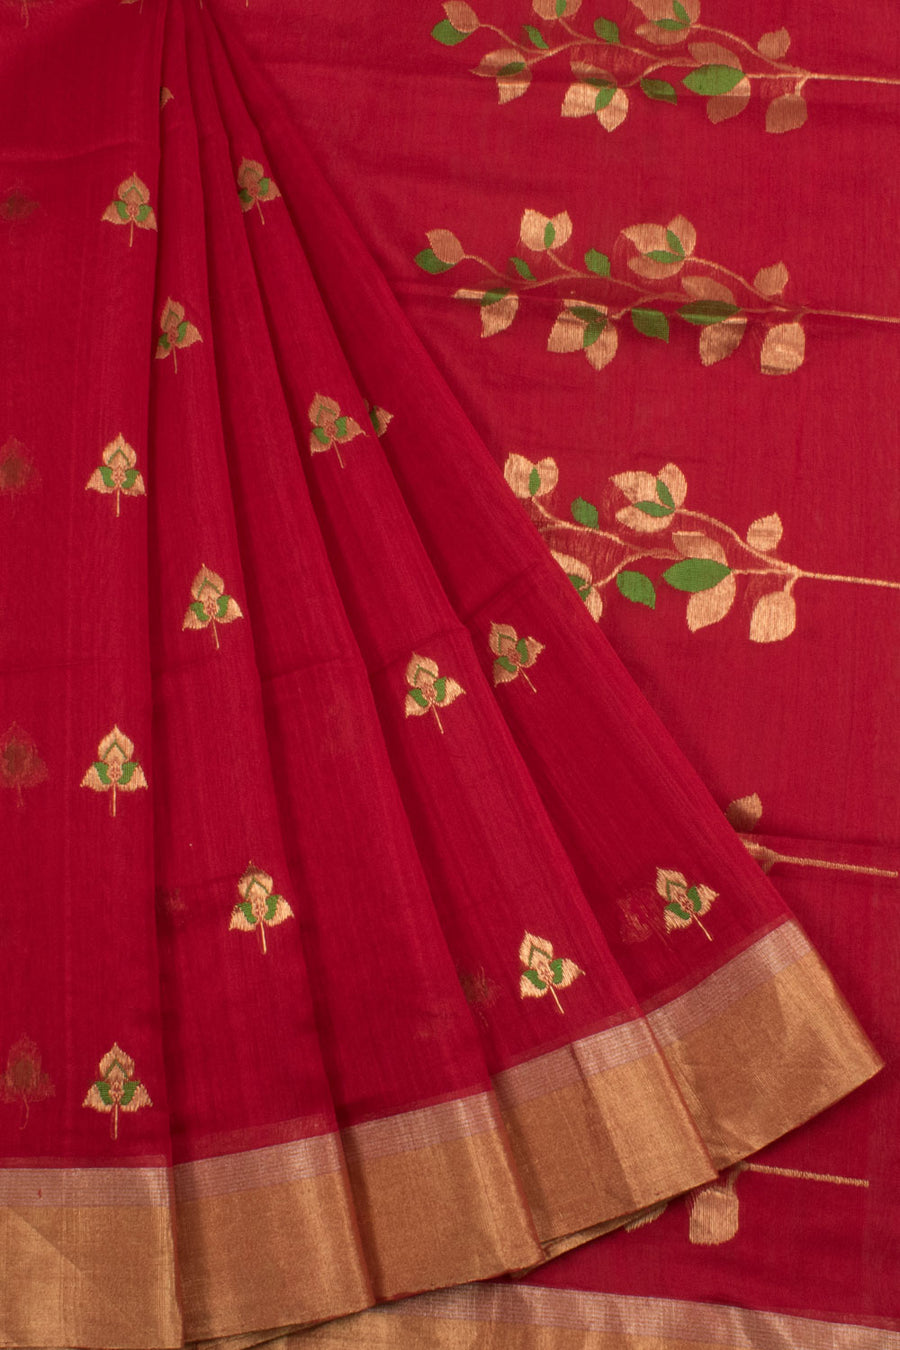 Handloom Chanderi Silk Cotton Saree with Meenakari Floral Motifs